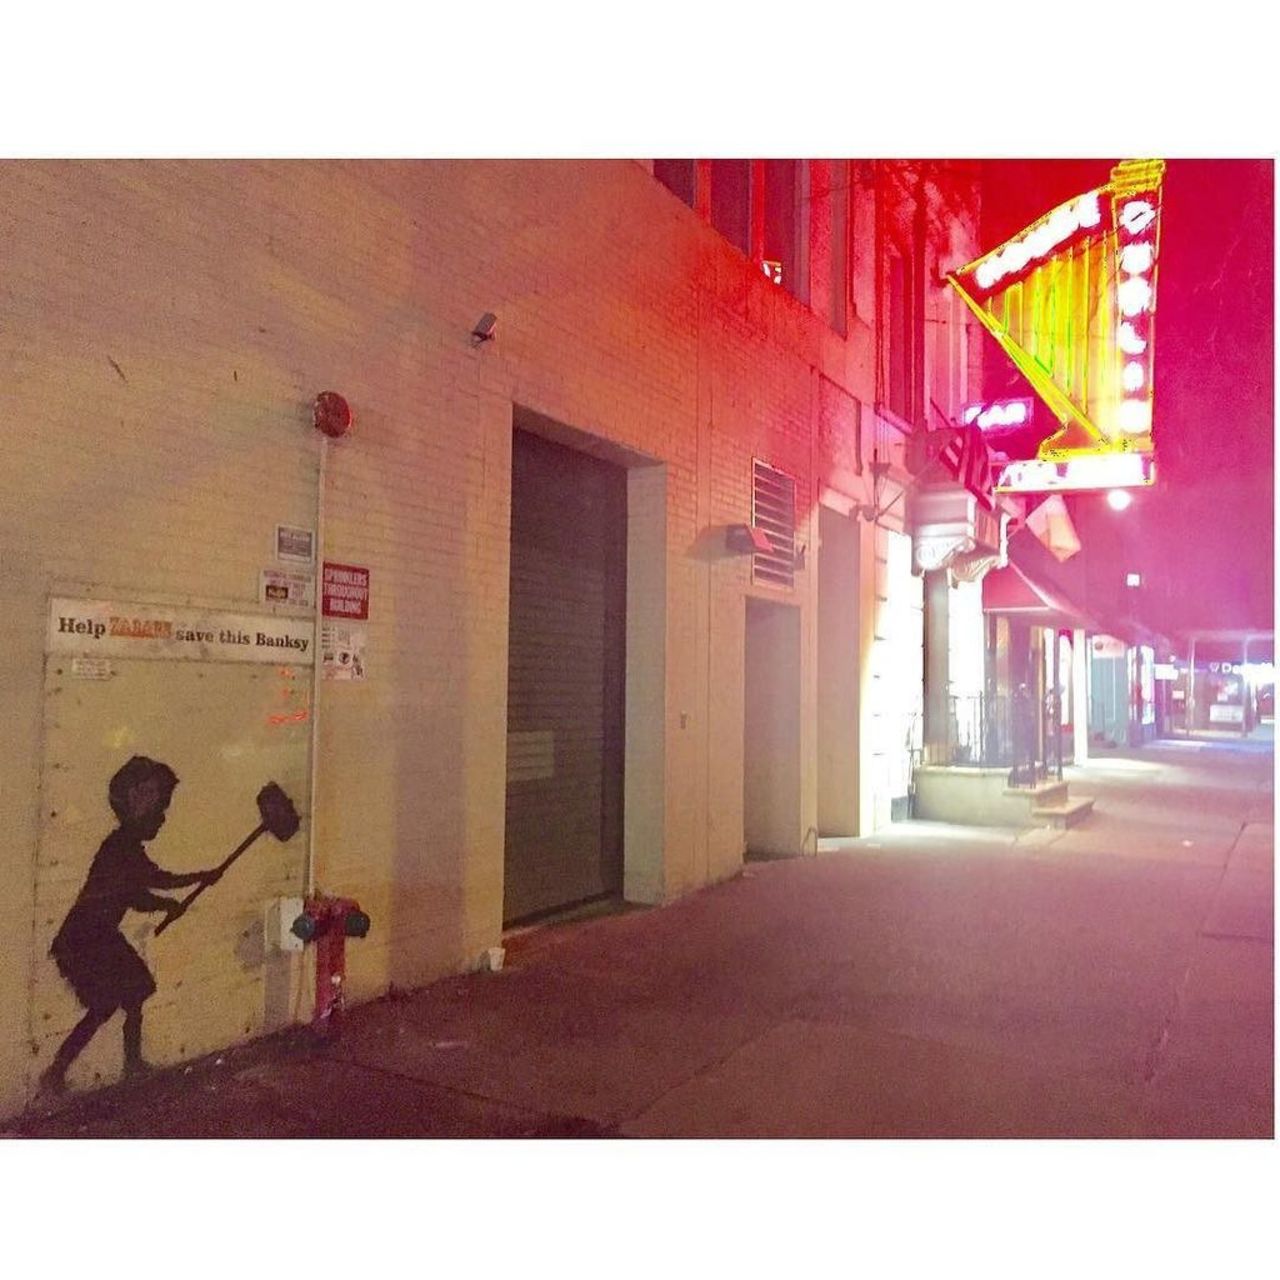 My First REAL Banksy ✏︎✏︎✏︎✏︎ ..#banksydoesnewyork #Banksy #Art #NYC #79th #Broadway 🇺🇸 http://ift.tt/2kpXHIr https://t.co/oqlWghCCTP